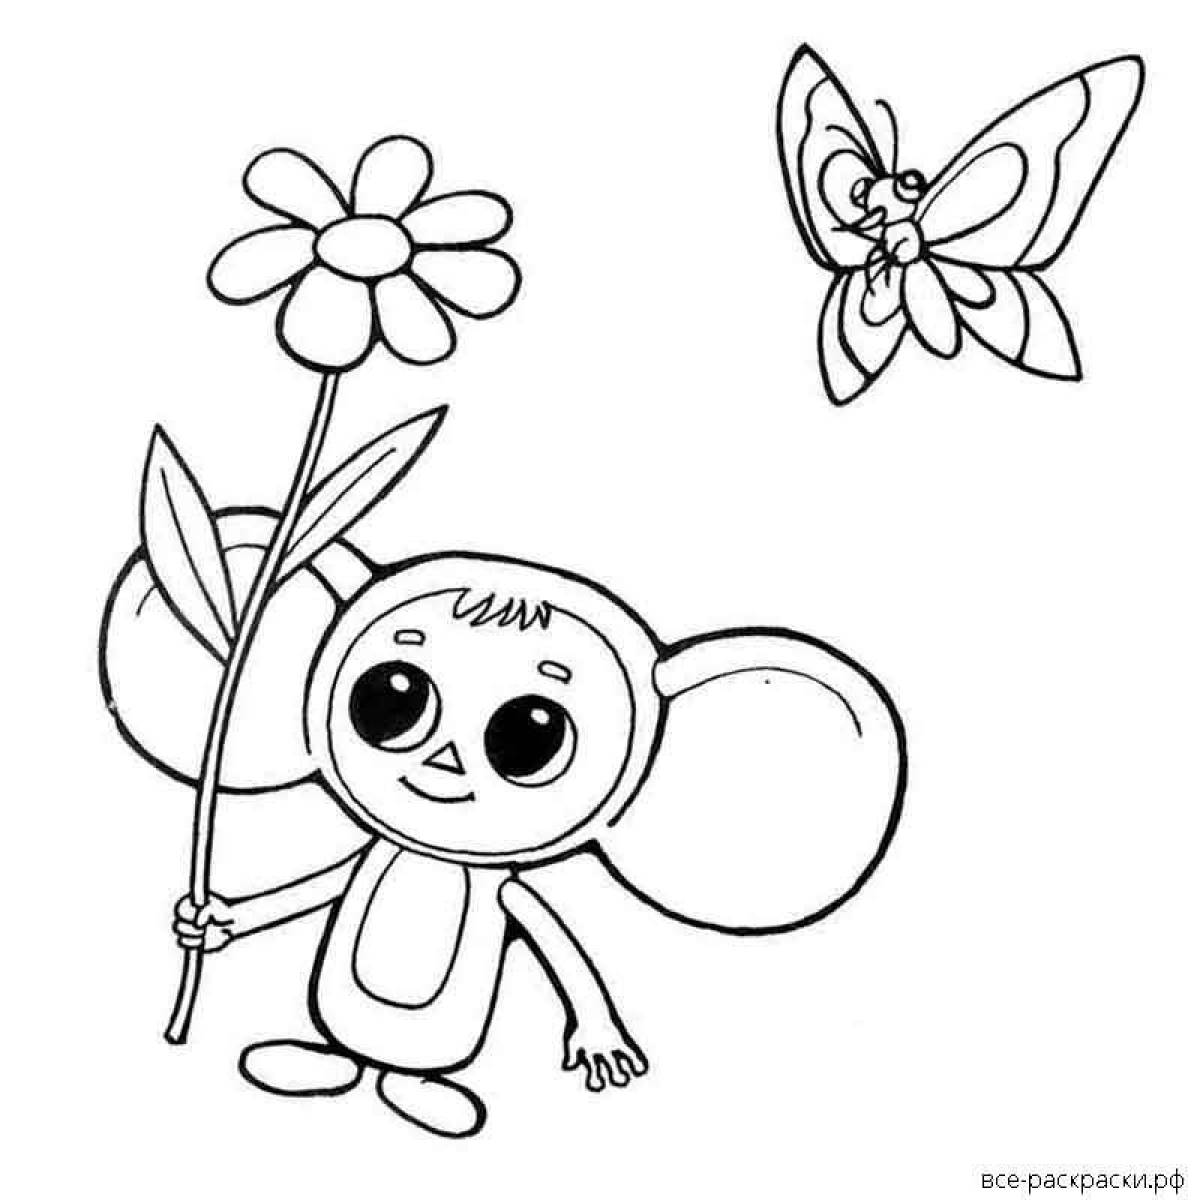 Joyful cheburashka coloring for children